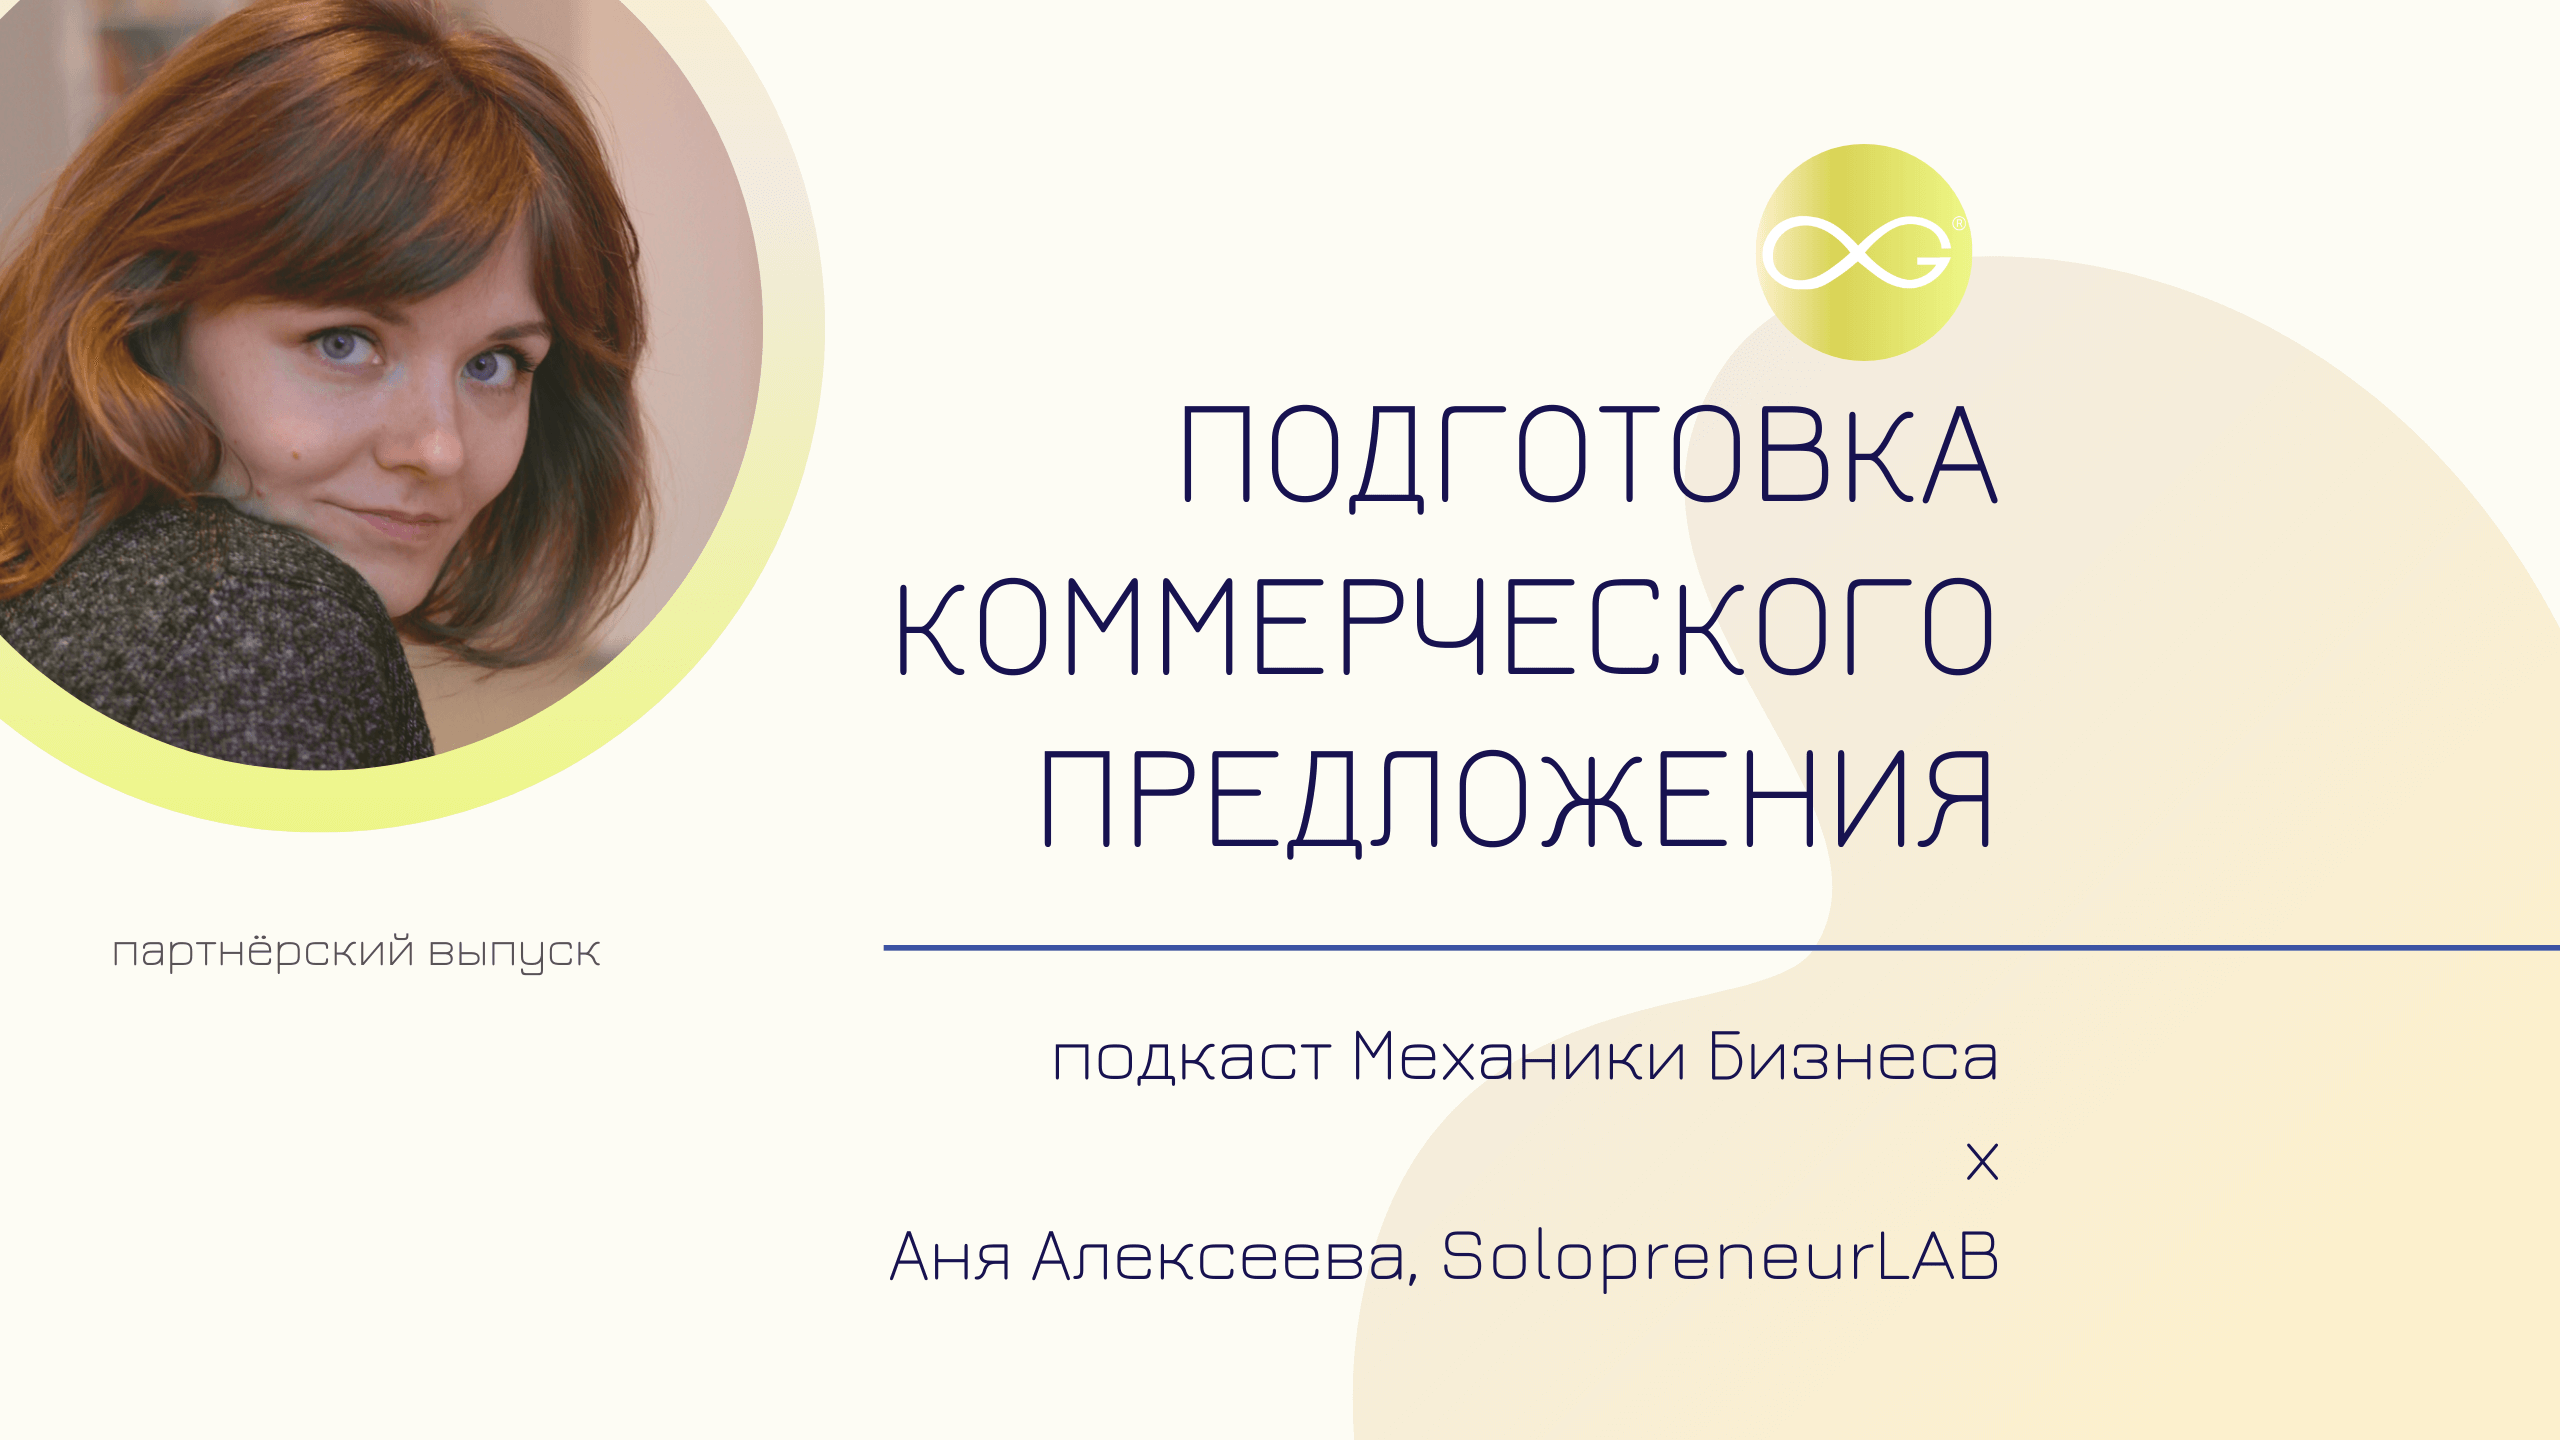 SolopreneurLAB - Аня Алексеева | подкаст Механики Бизнеса #70 | Подготовка коммерческого предложения